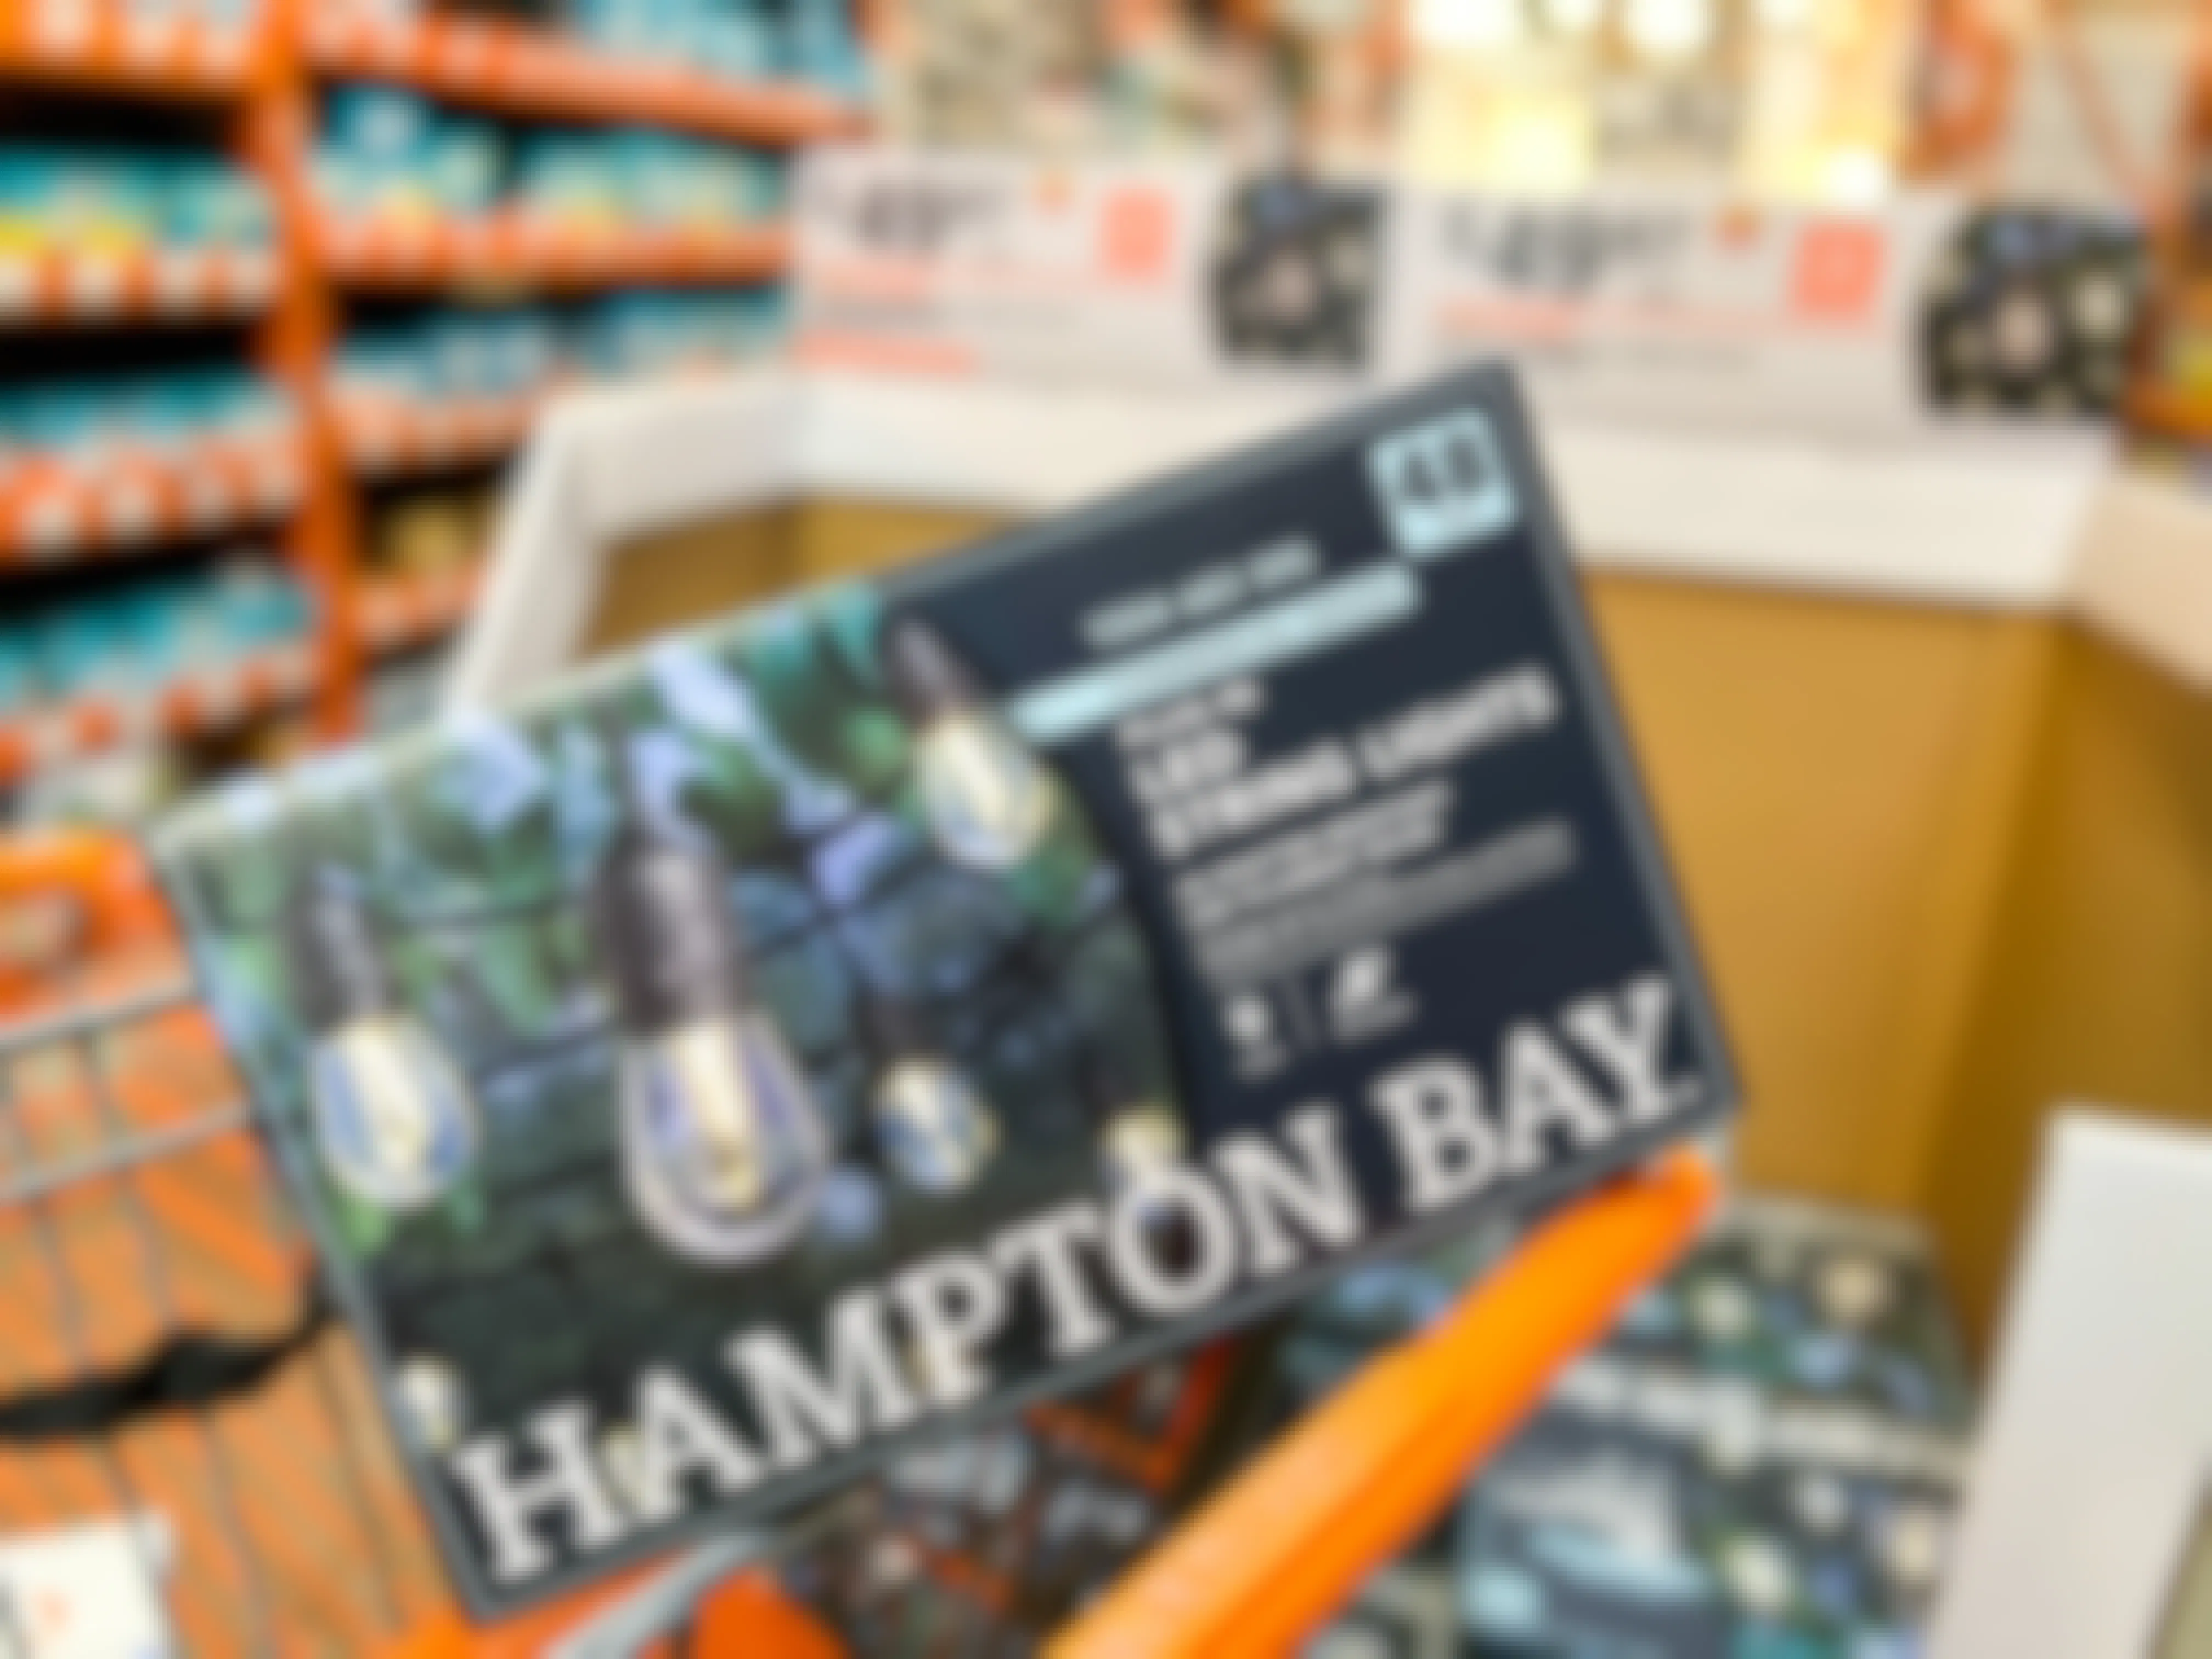 Hampton Bay string lights in cart